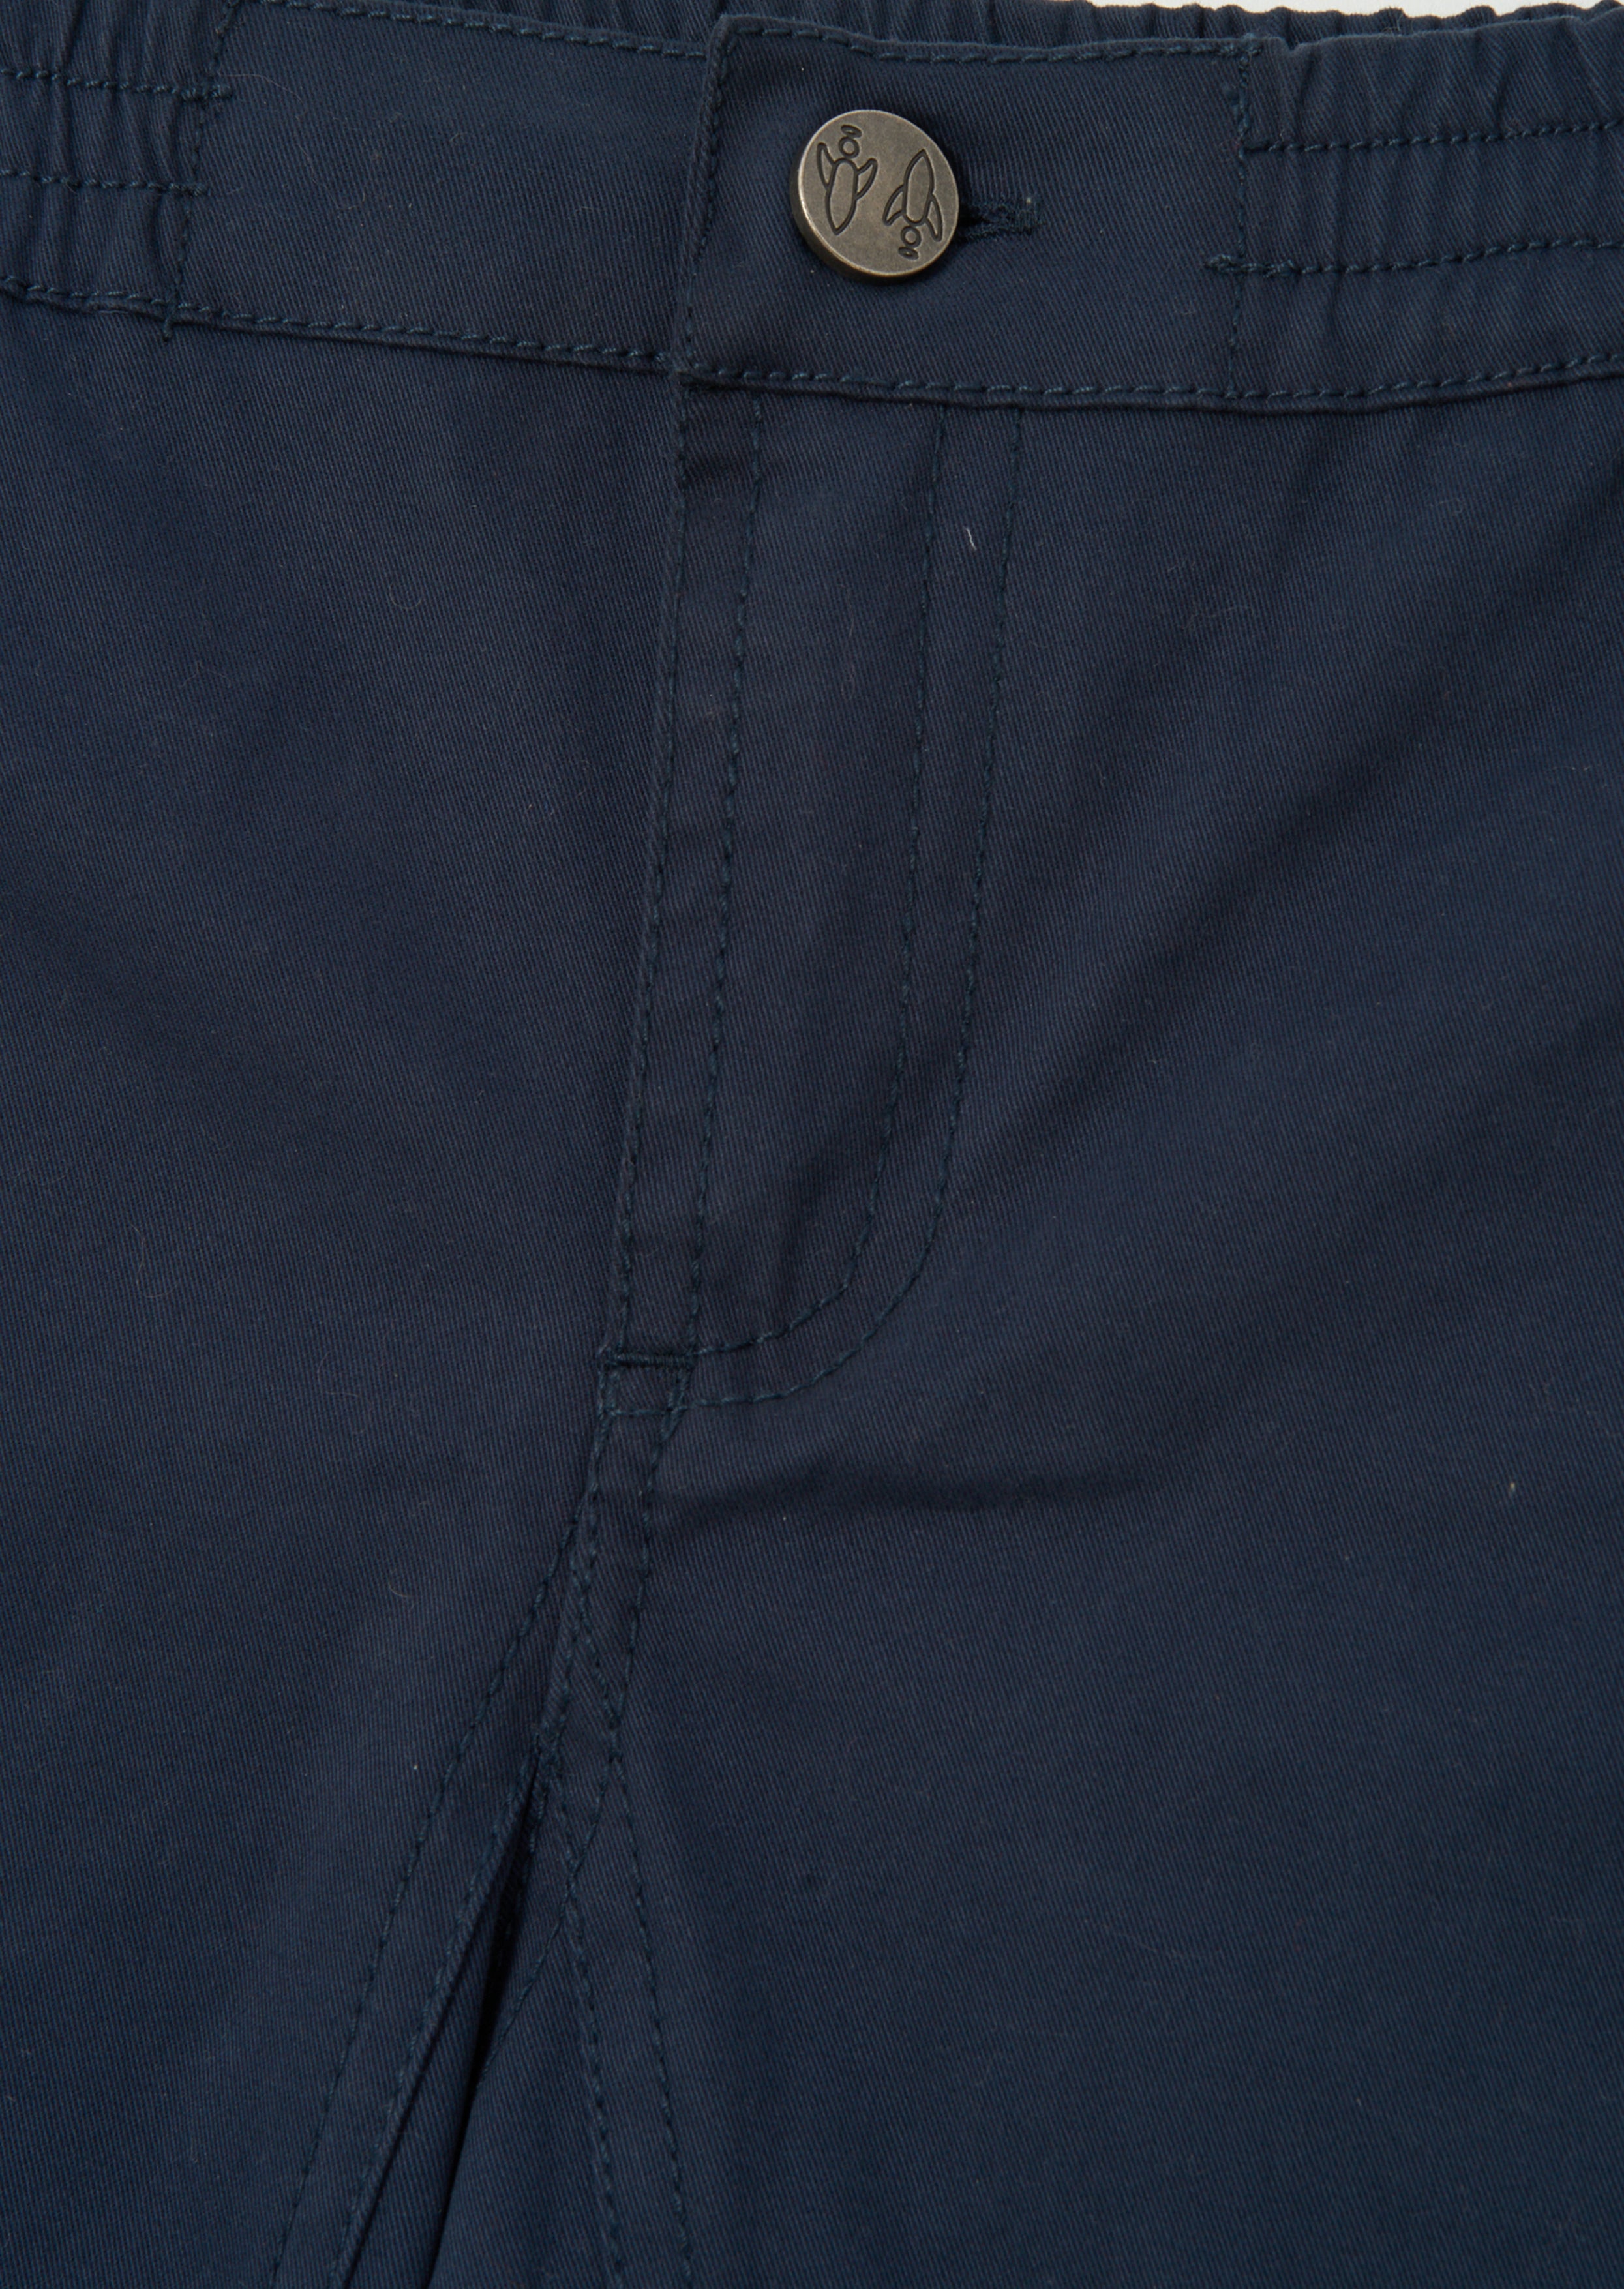 Boys Solid Cotton Blue Smart Chino Pants